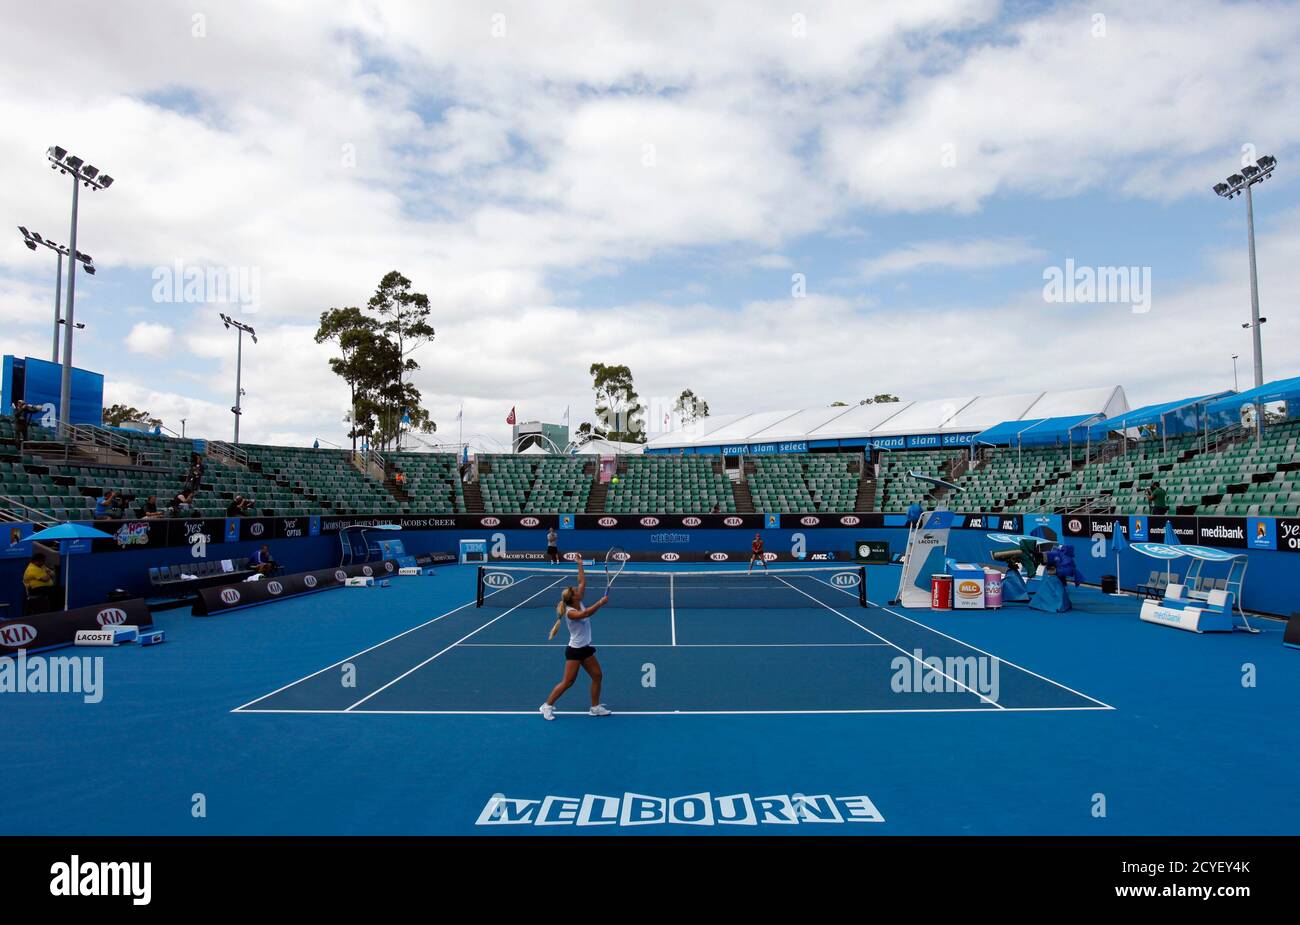 Dominika Cibulkova of Slovakia serves to Ana Ivanovic of Serbia during a  practice session before the Australian Open tennis tournament in Melbourne  January 15, 2012. REUTERS/Mark Blinch (AUSTRALIA - Tags: SPORT TENNIS